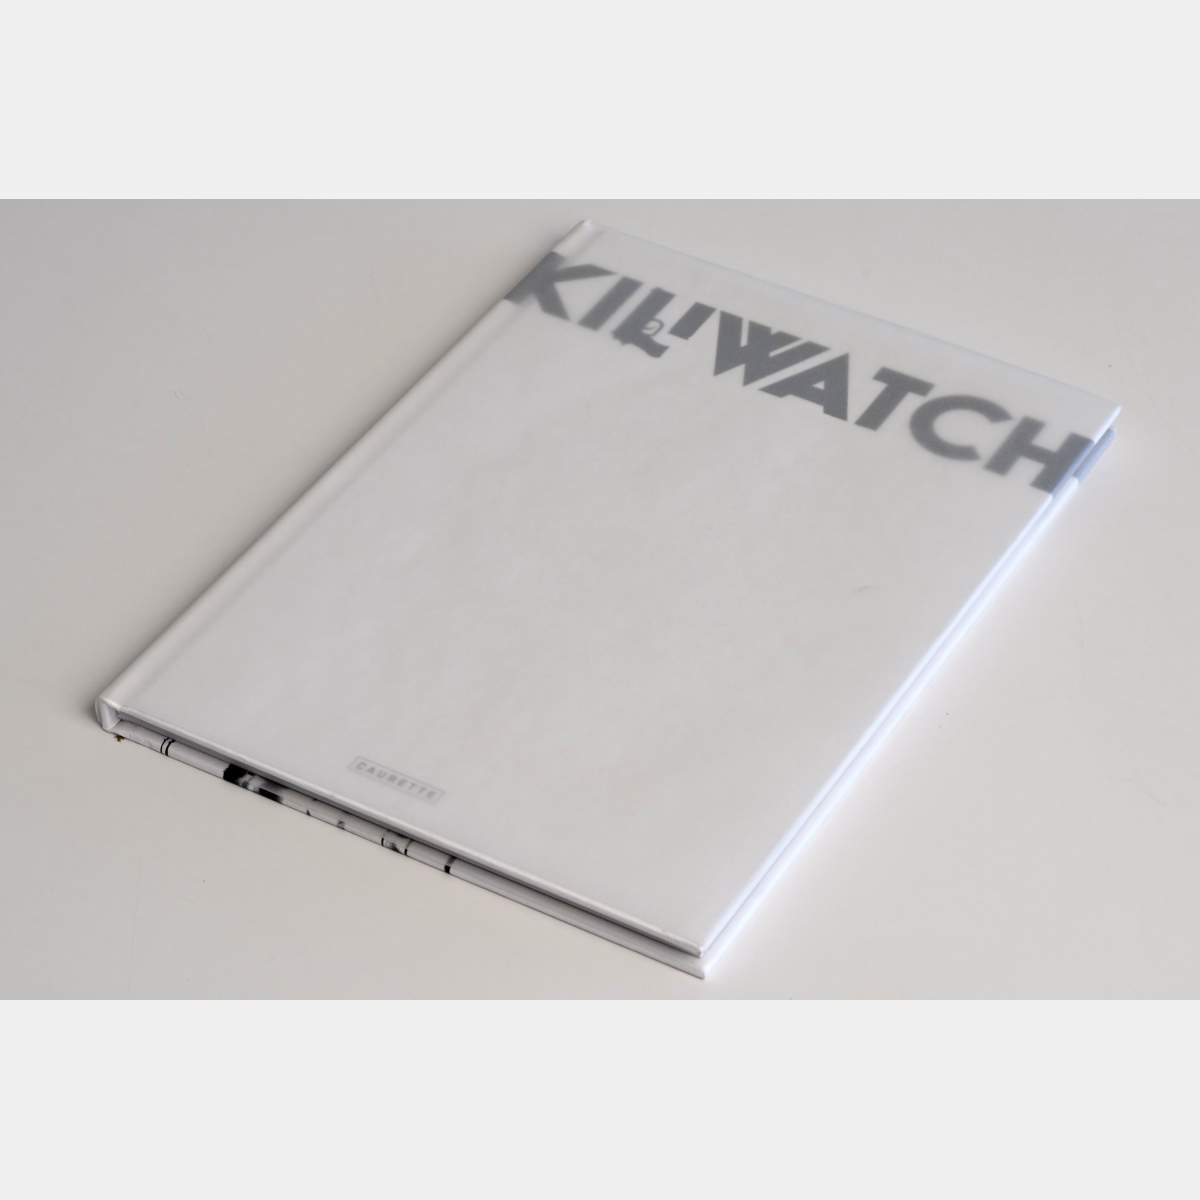 KILIWATCH Collector - couverture "Blank Cover" prête à dessiner !